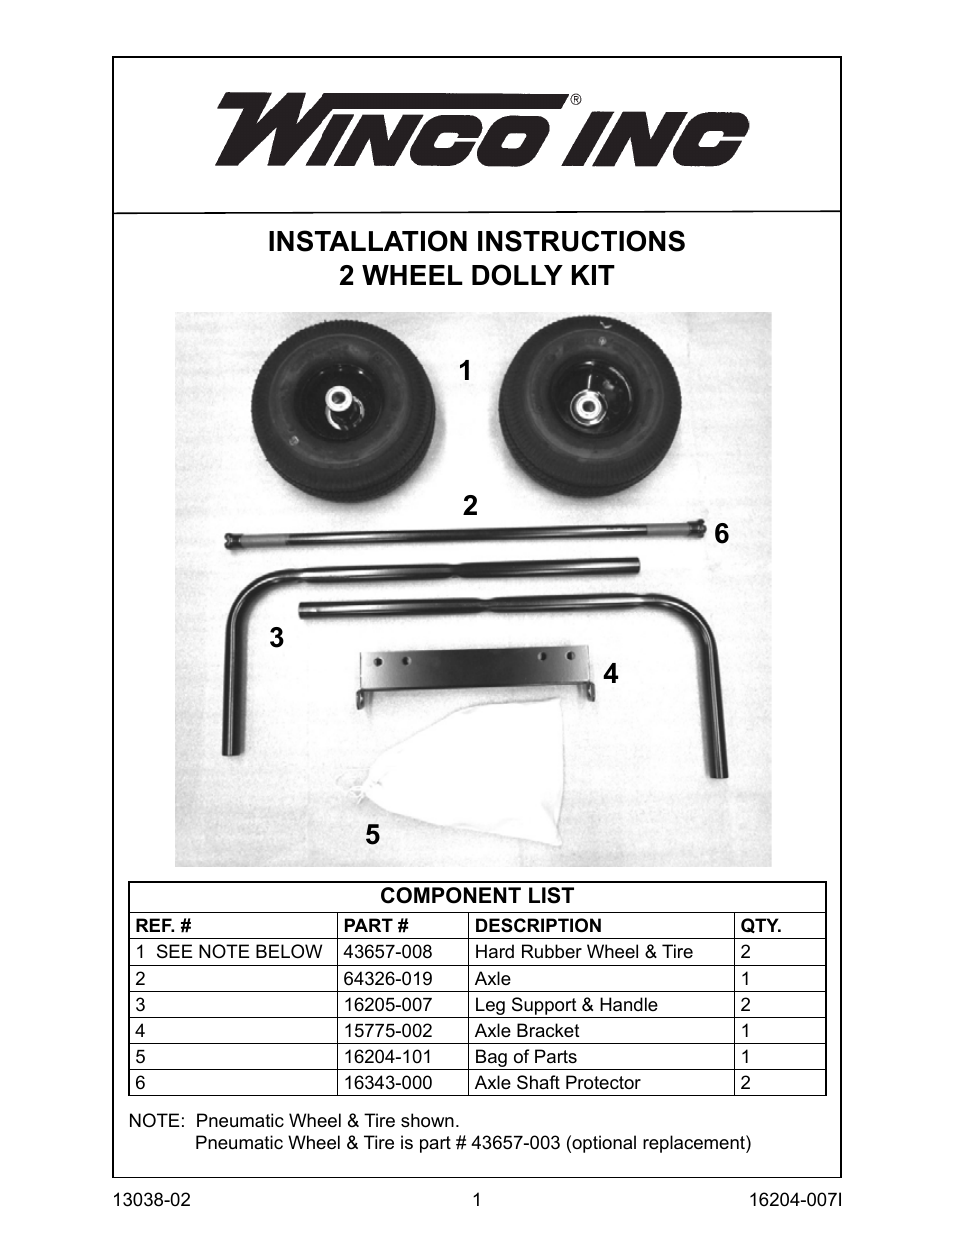 2-Wheel Dolly Kit Assembly Instructions (2013)